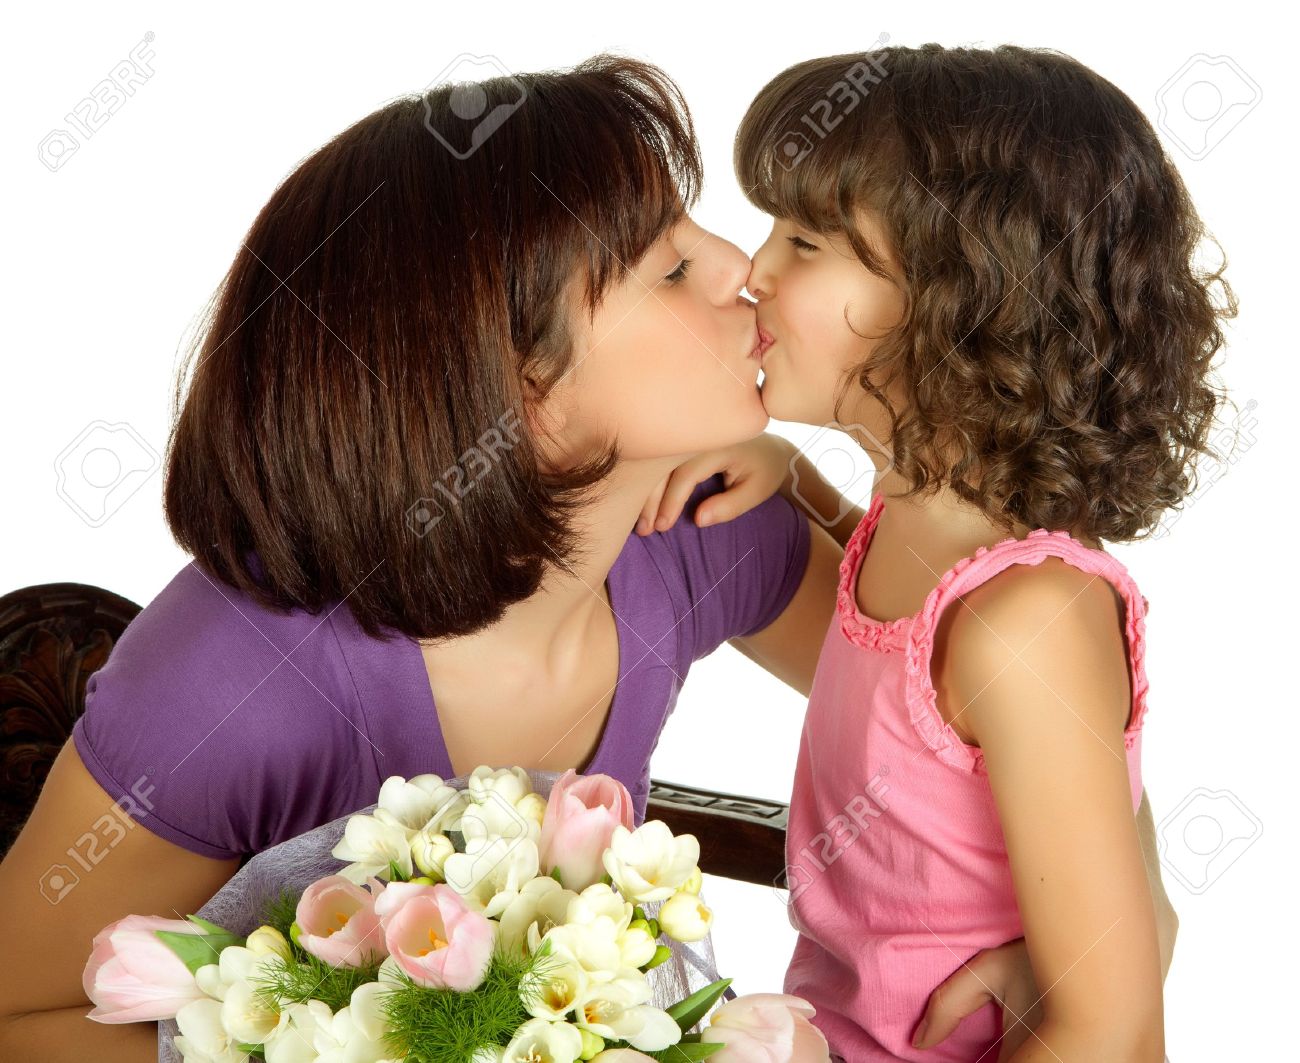 callofduty modernwarfare share mother daughter kissing videos photos